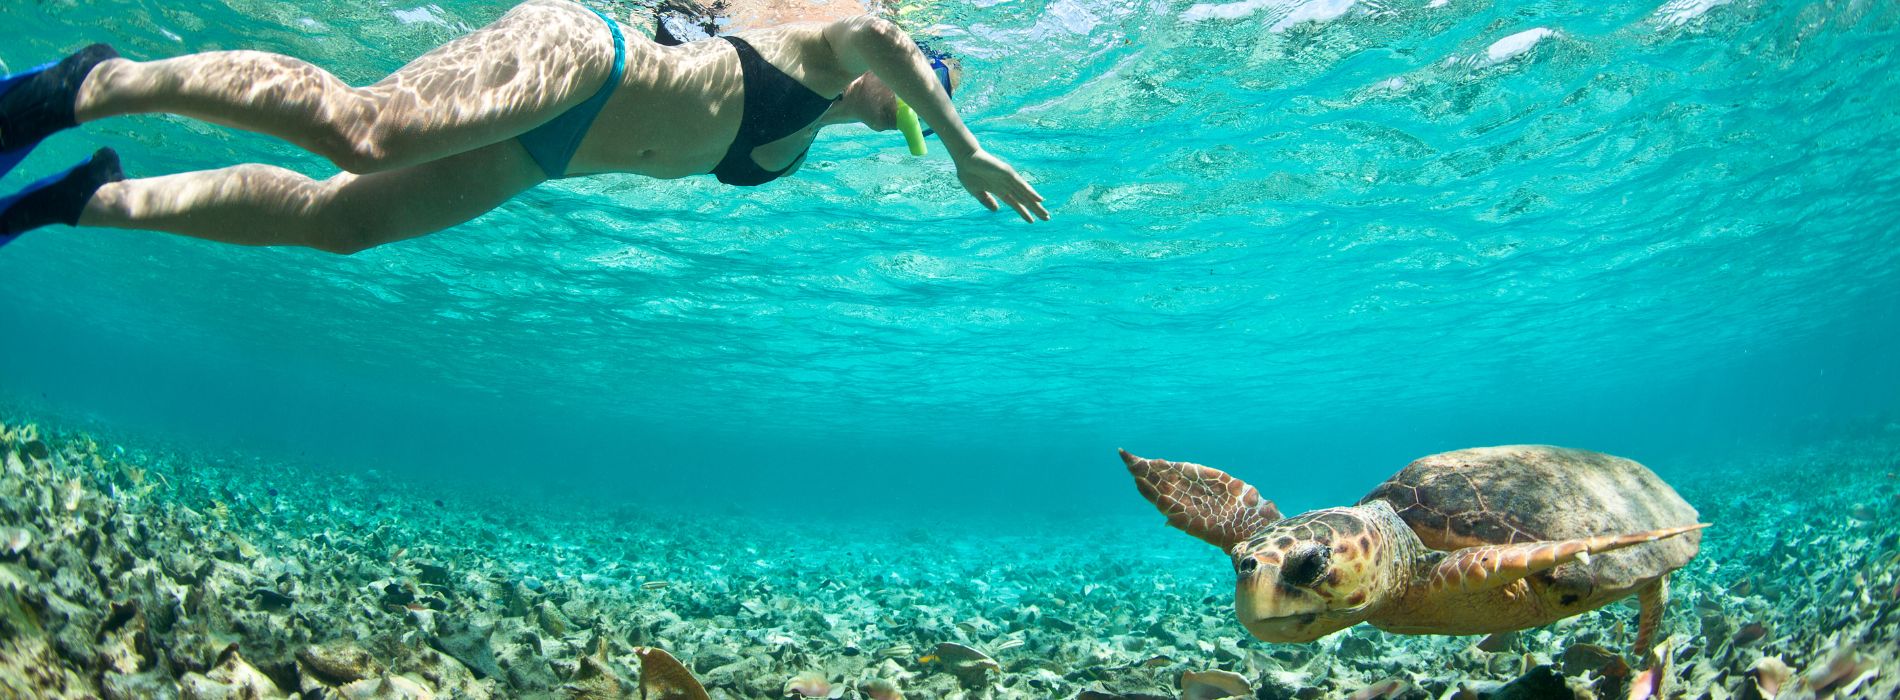 Snorkeling with Sea Turtles Hawaii - Madeinsea©